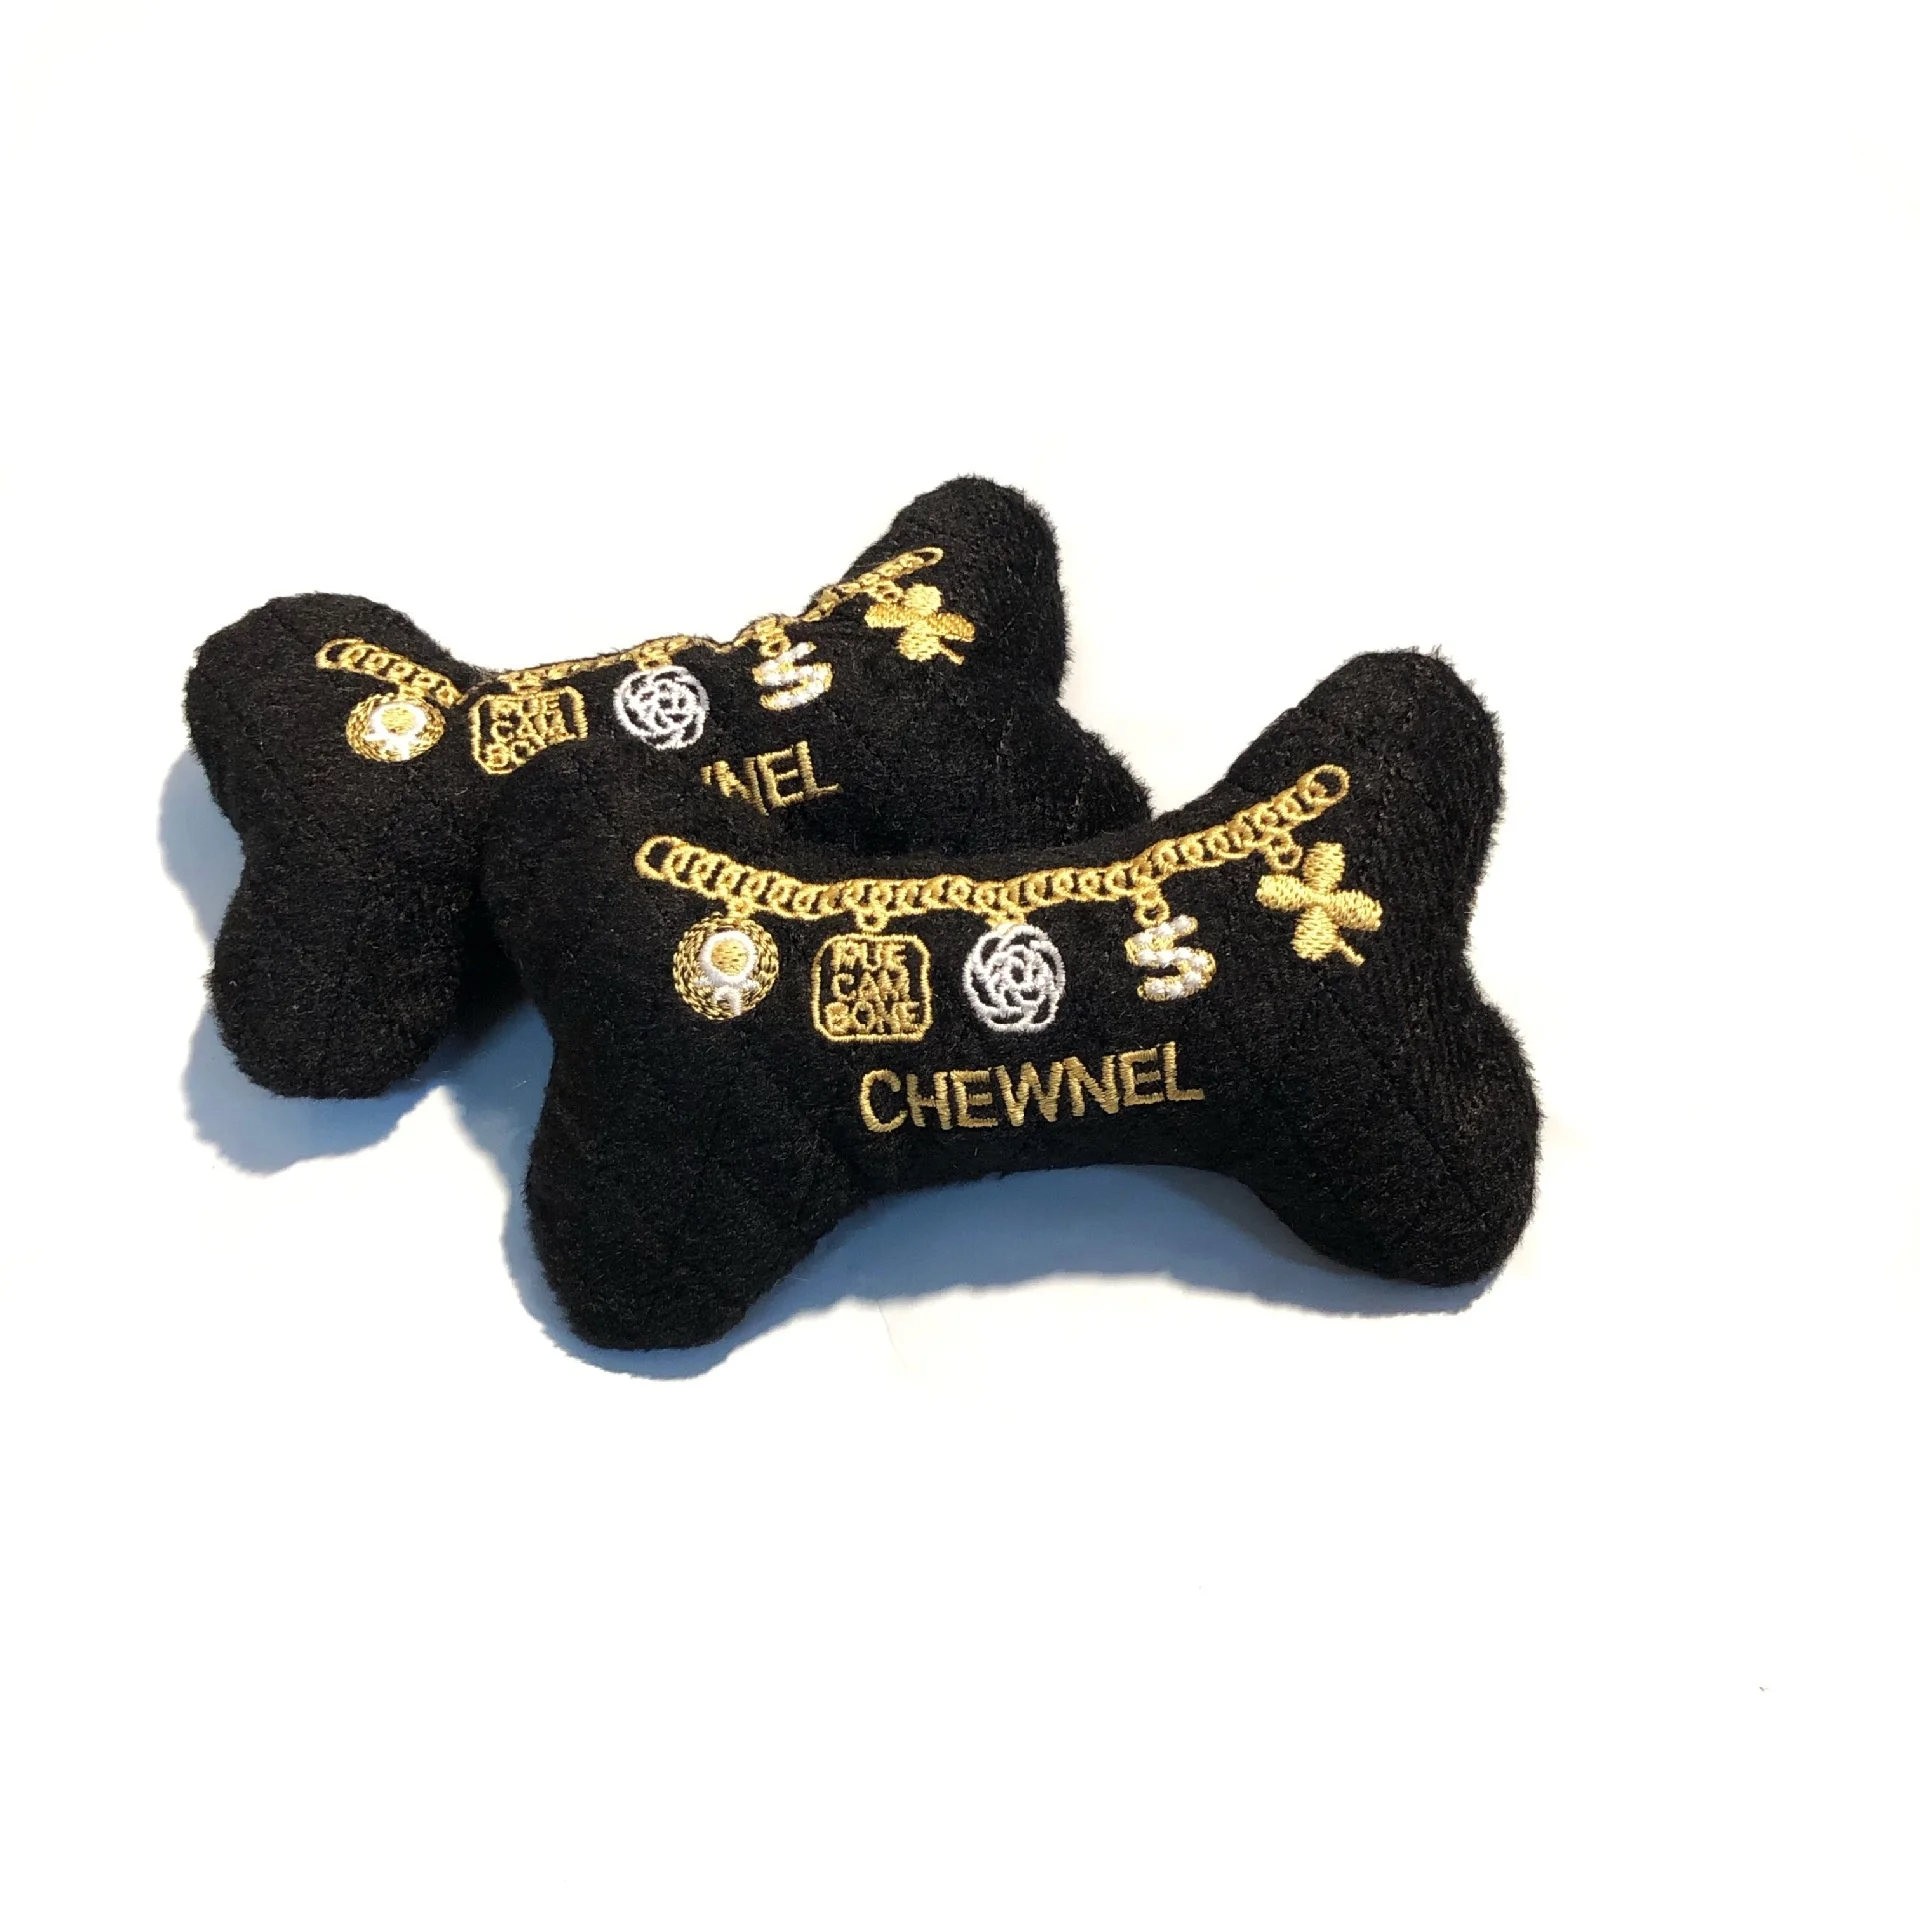 Pet Supplies : Chewy Vuitton Dog Toy : Dog Diggin Designs Runway Pup  Collection  Unique Squeaky Parody Plush Dog Toys – Prêt-à-Porter Dog  Bones, Balls & More 